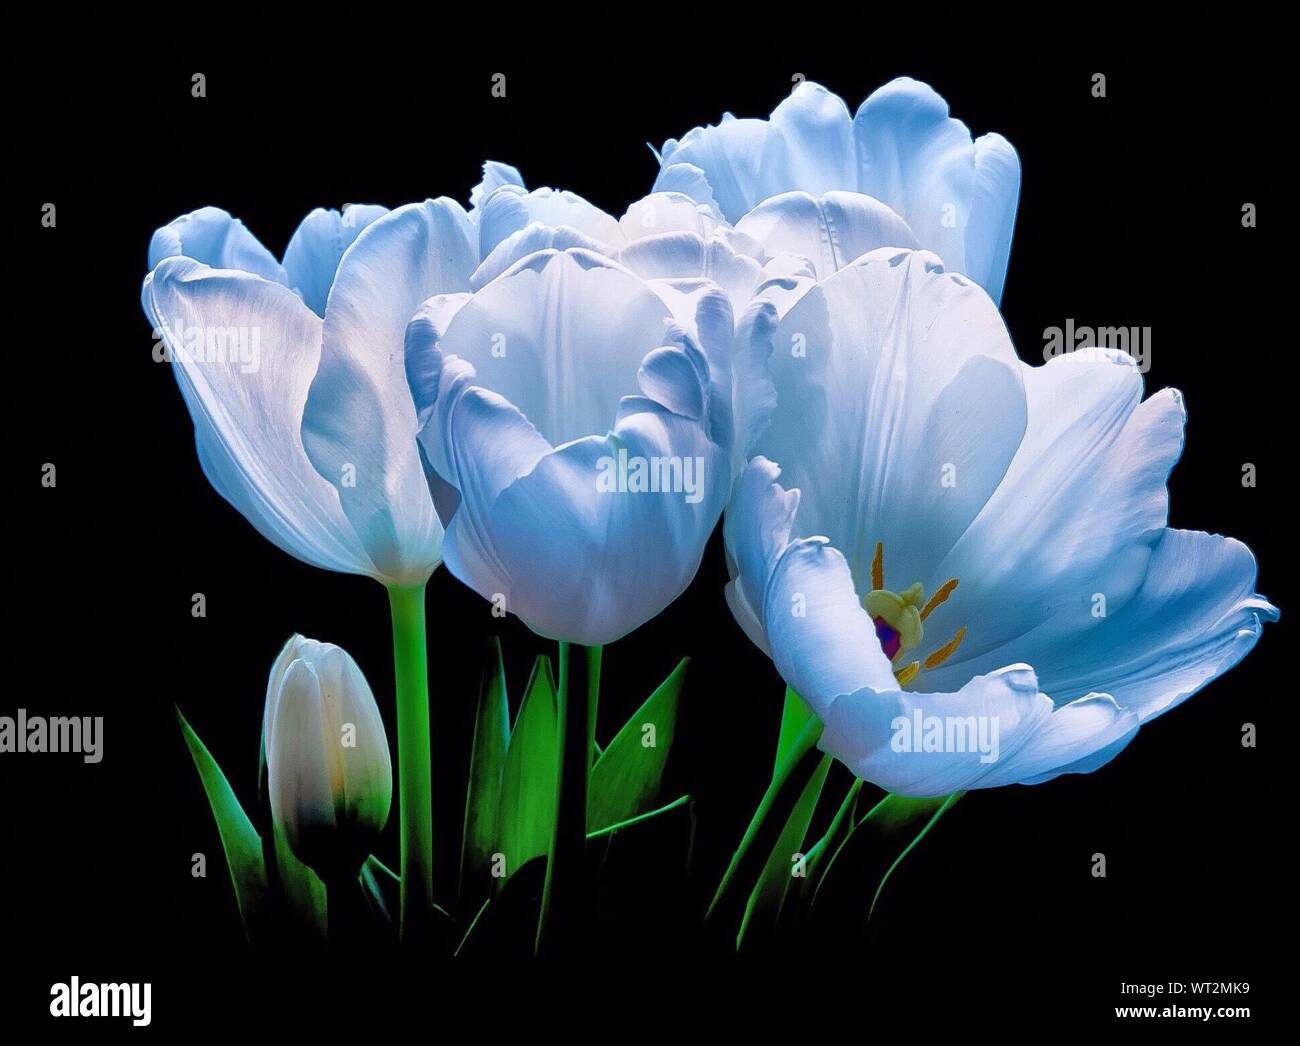 Close Up Of White Tulip Flowers Against Black Background Stock Photo Alamy